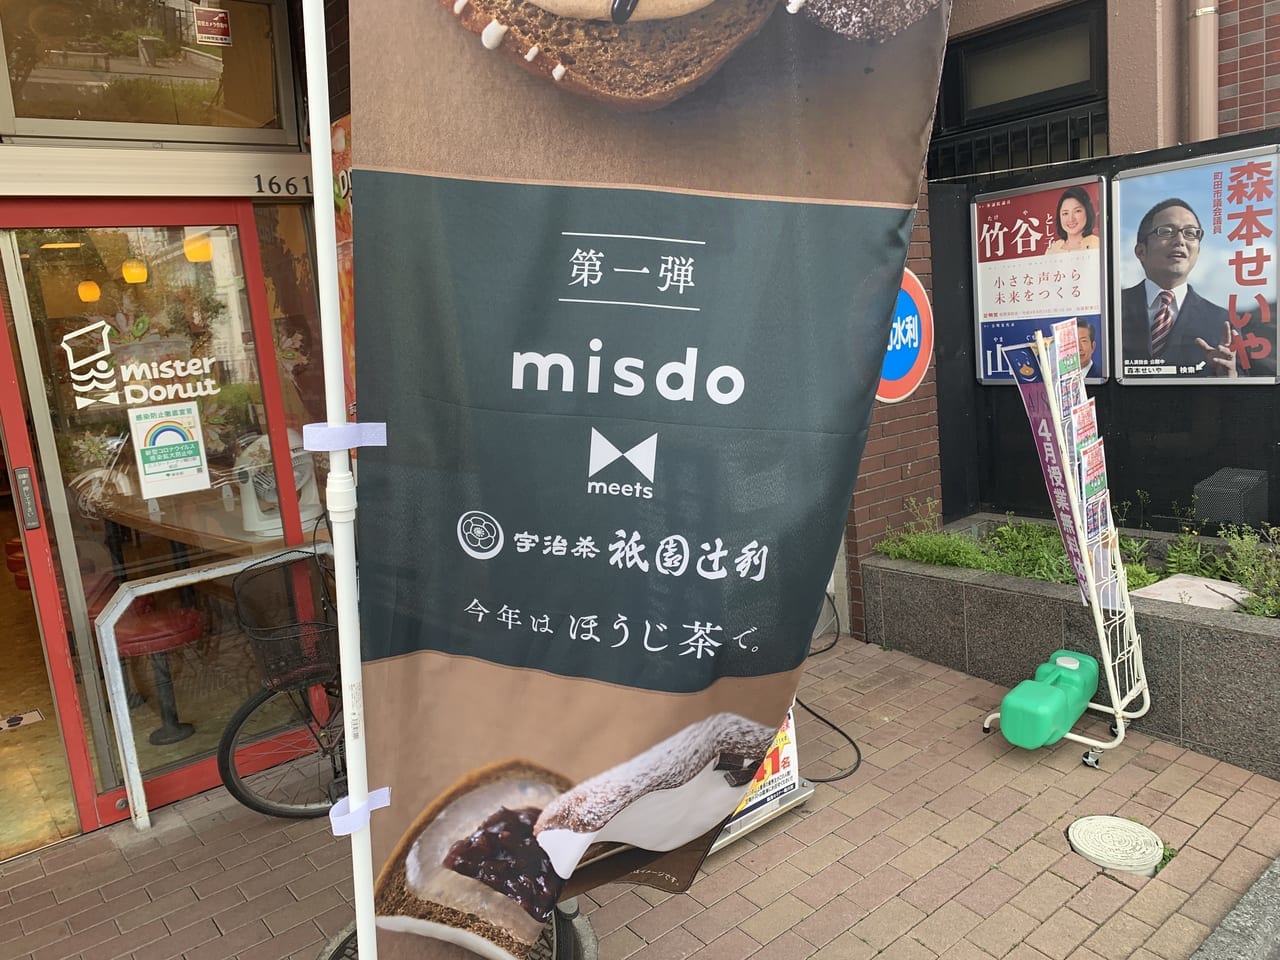 misdo meets 祇園辻利 第一弾の幟